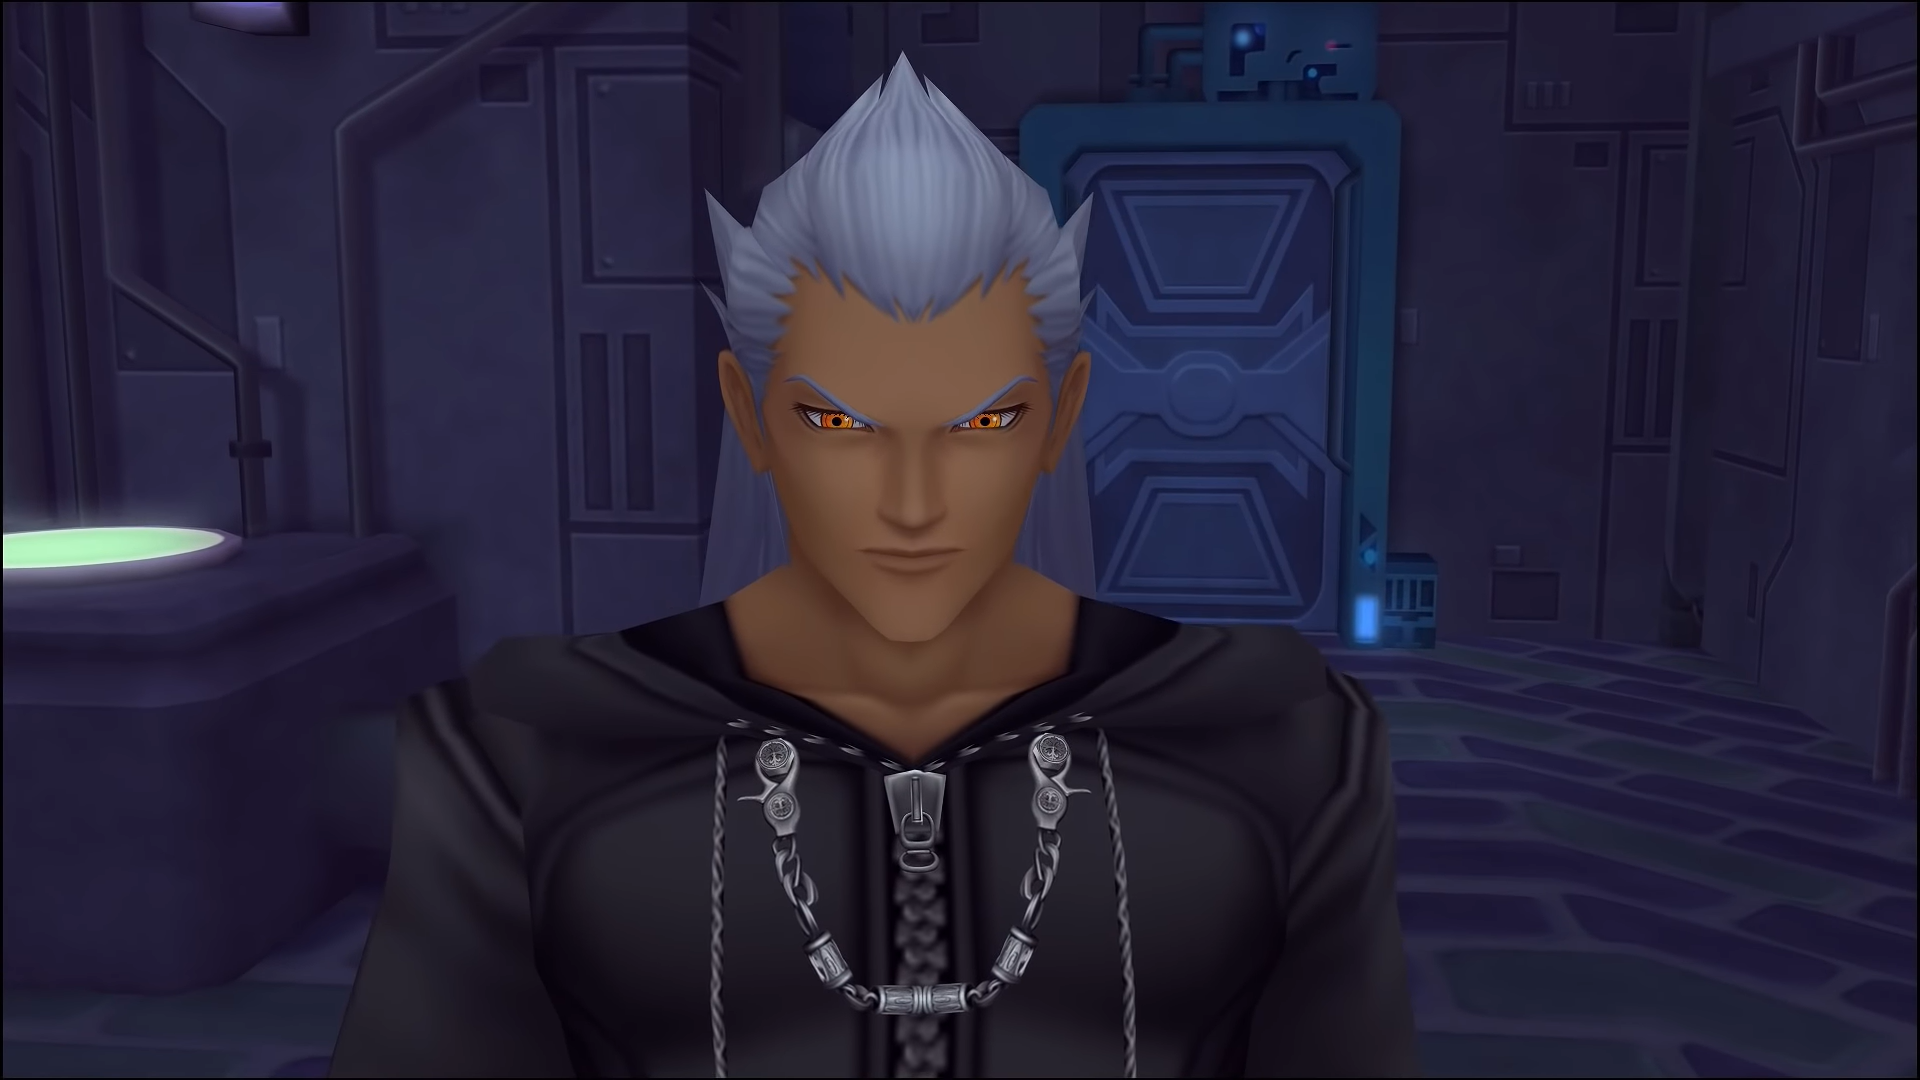 "Kingdom Hearts II". 2007. Square Enix. "Ansem" reveals himself to Diz.